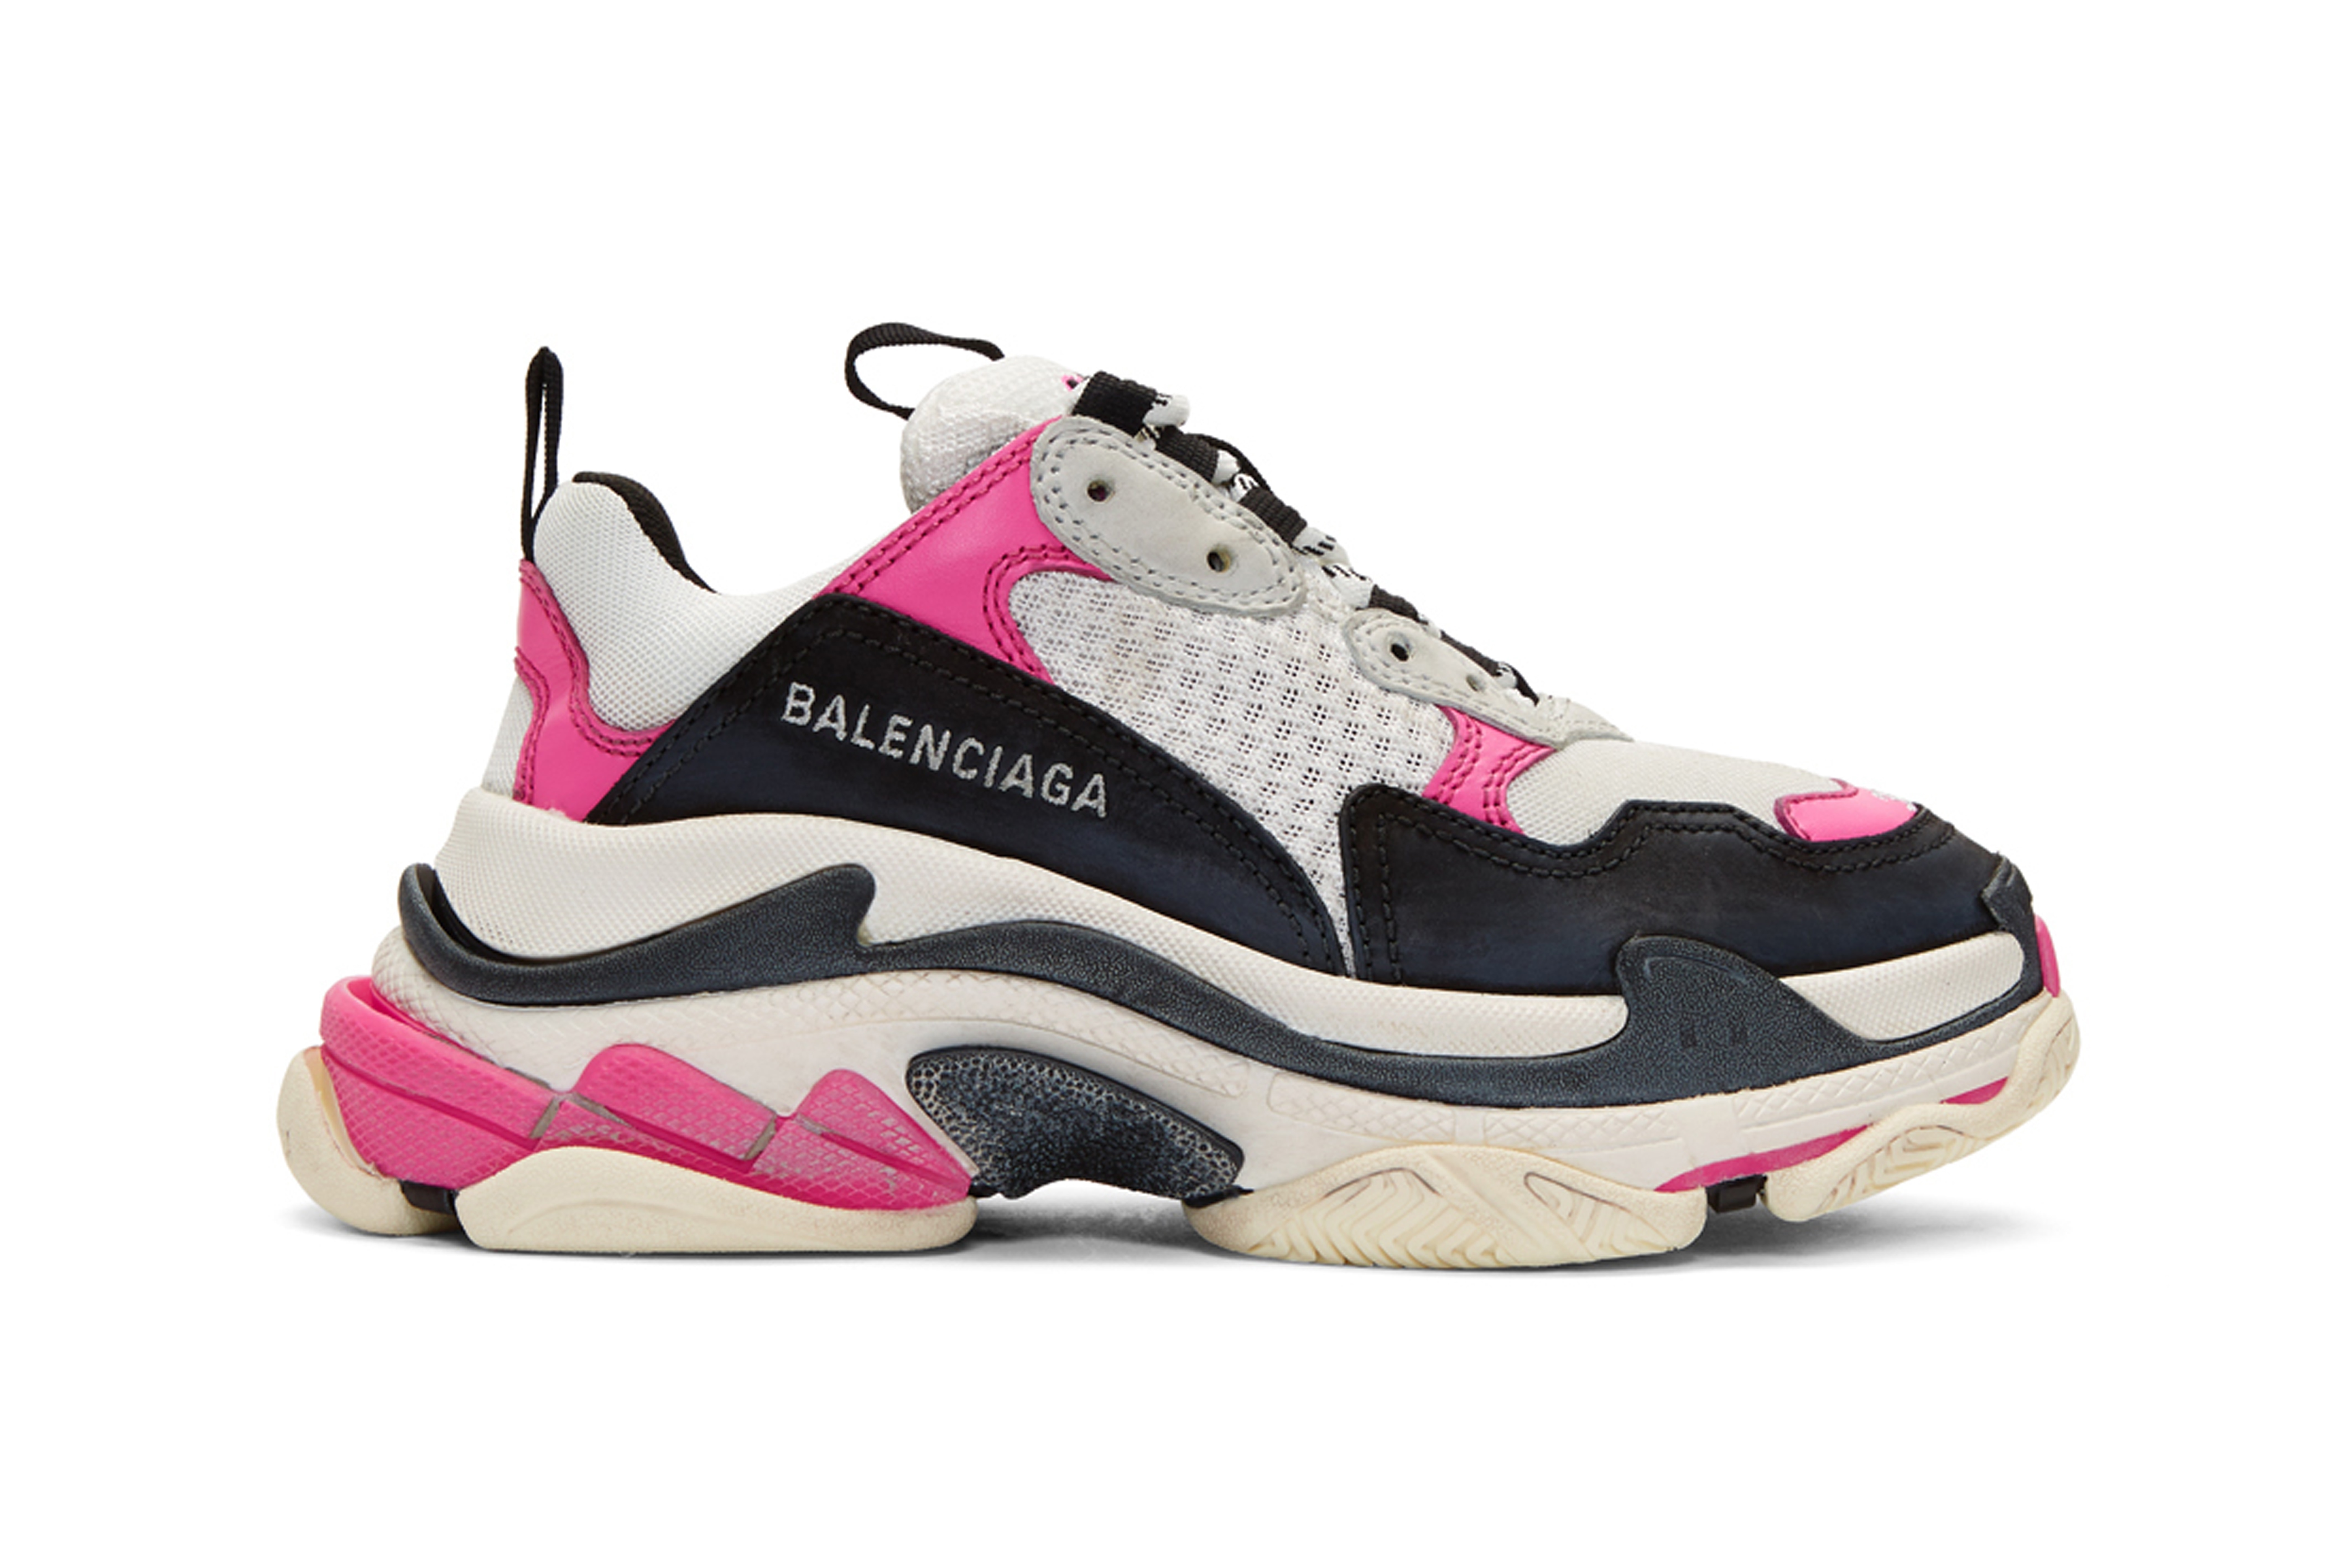 Balenciaga Triple-S Sneaker Pink/Black Restock Chunky Sneaker Dad Shoe Demna Gvasalia Trend